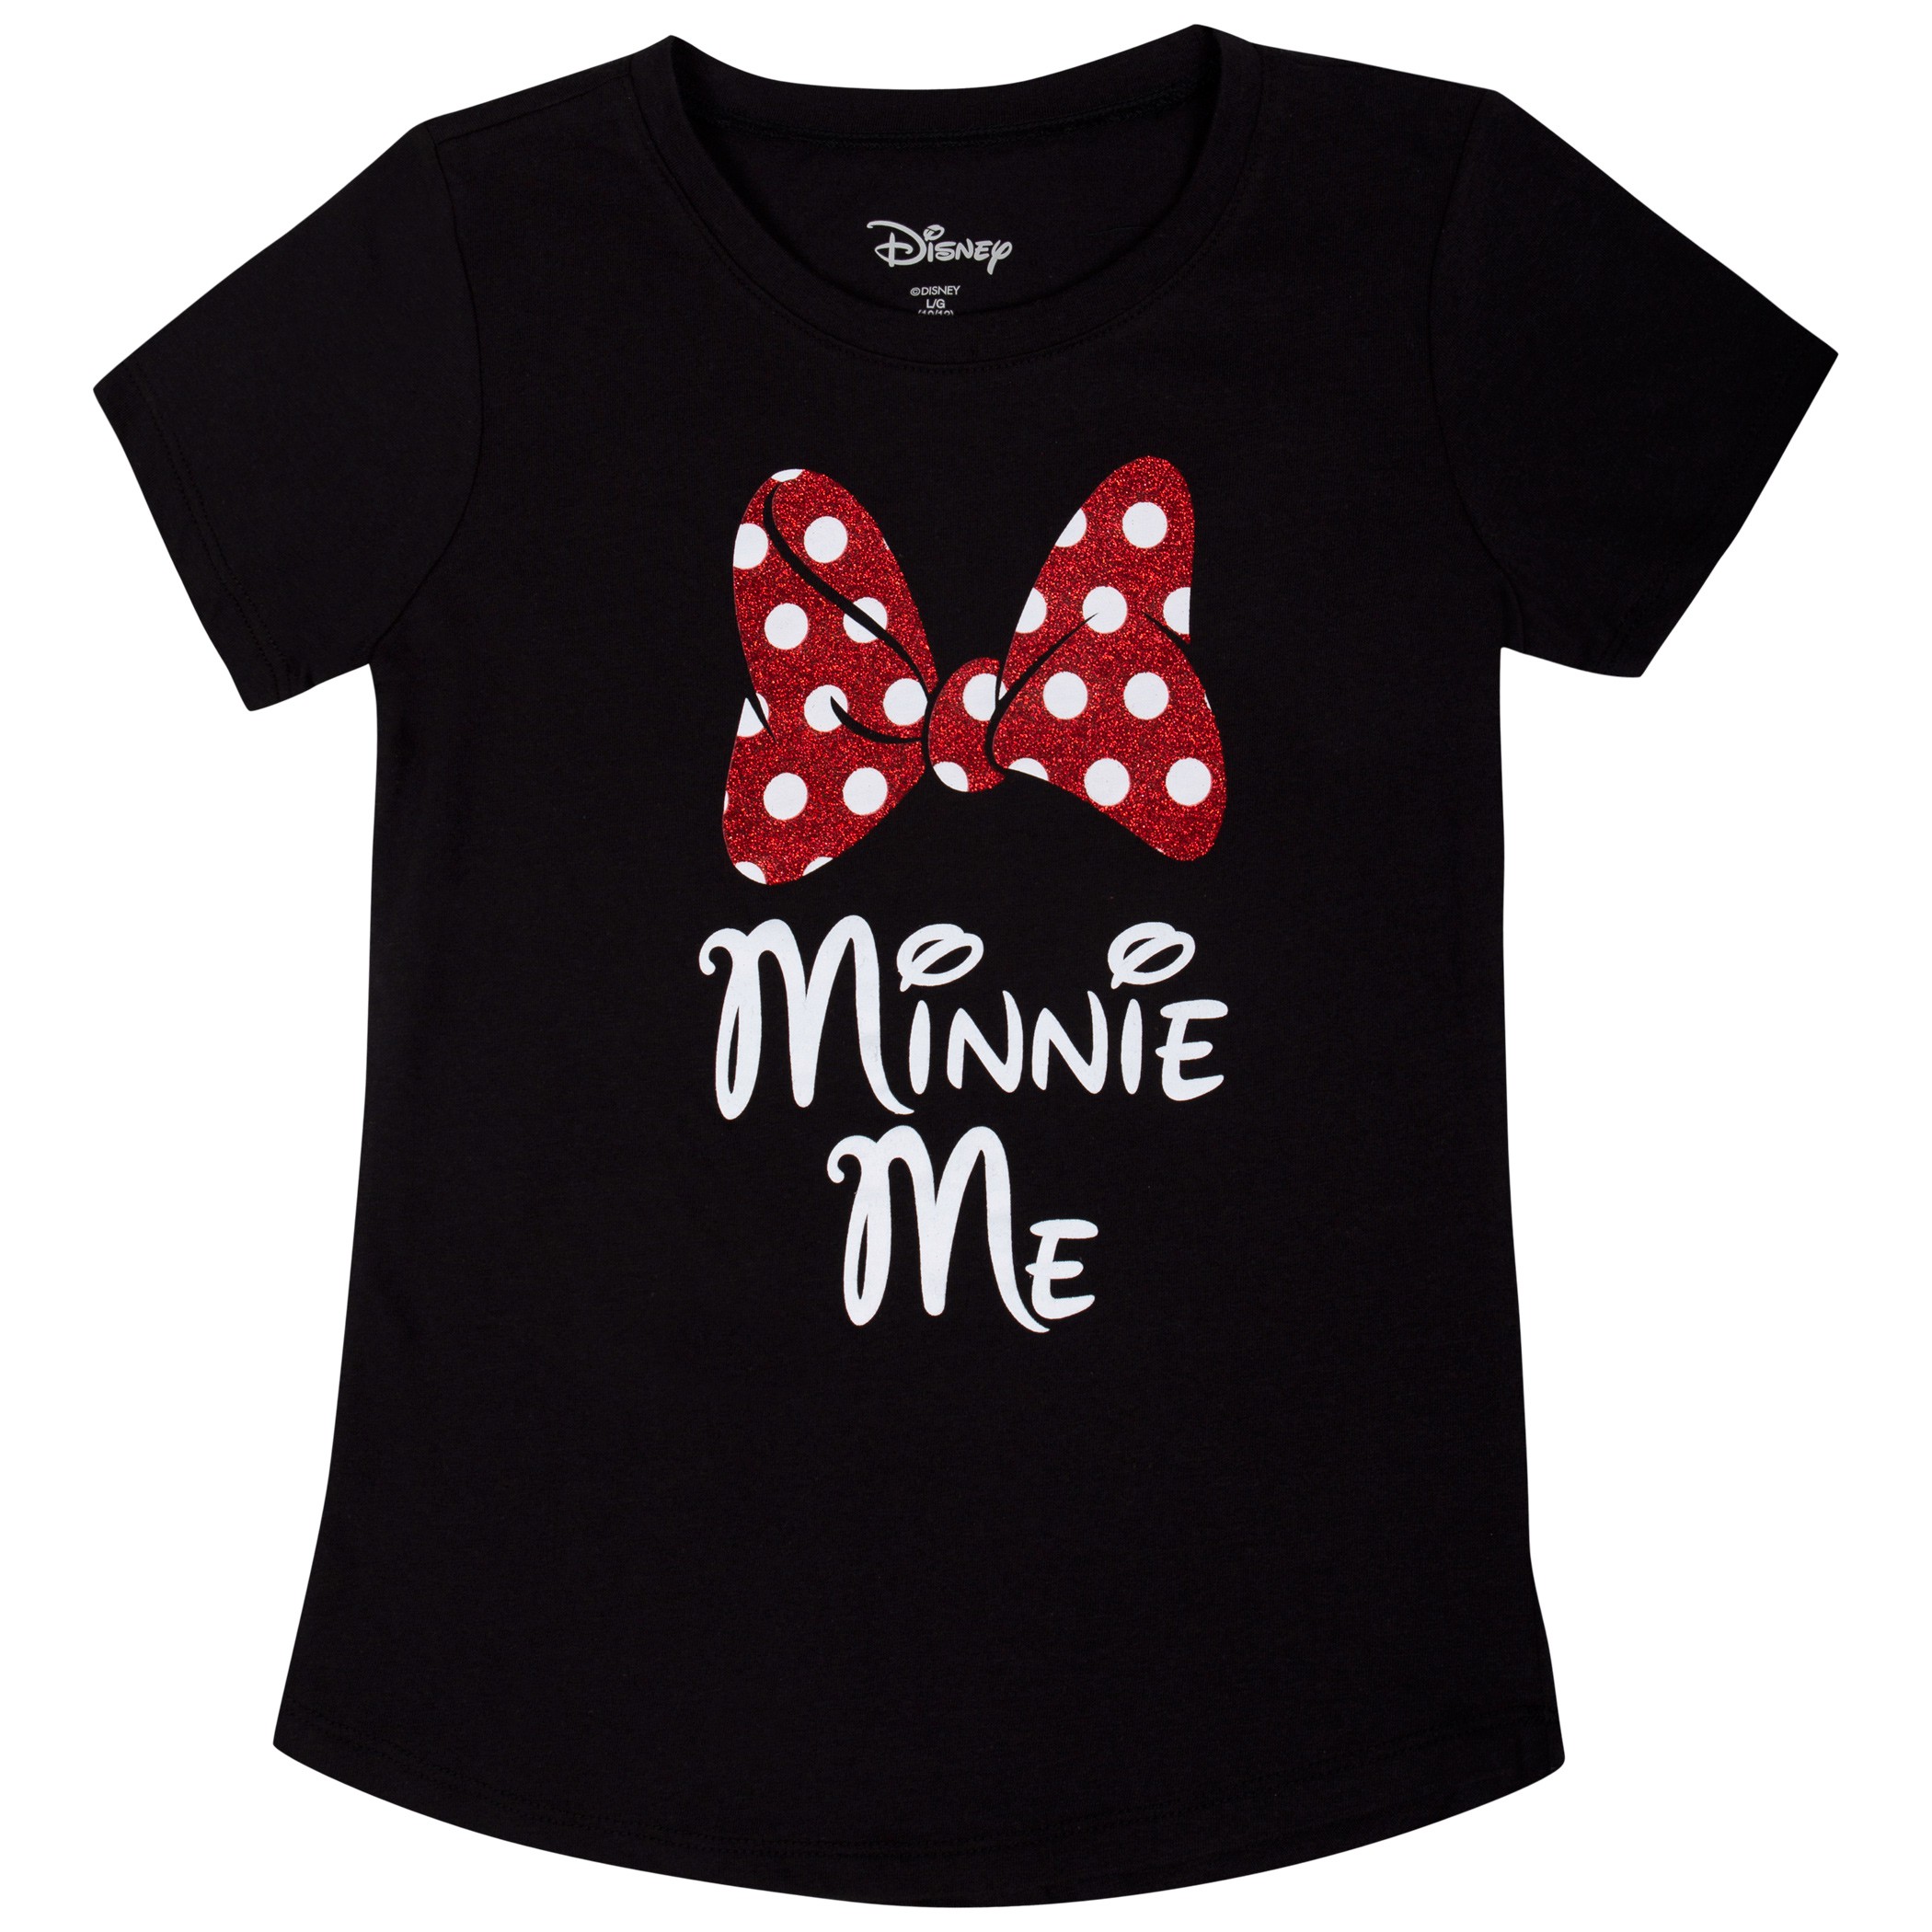 Minnie Mouse Minnie Me Youth Black Tee Shirt